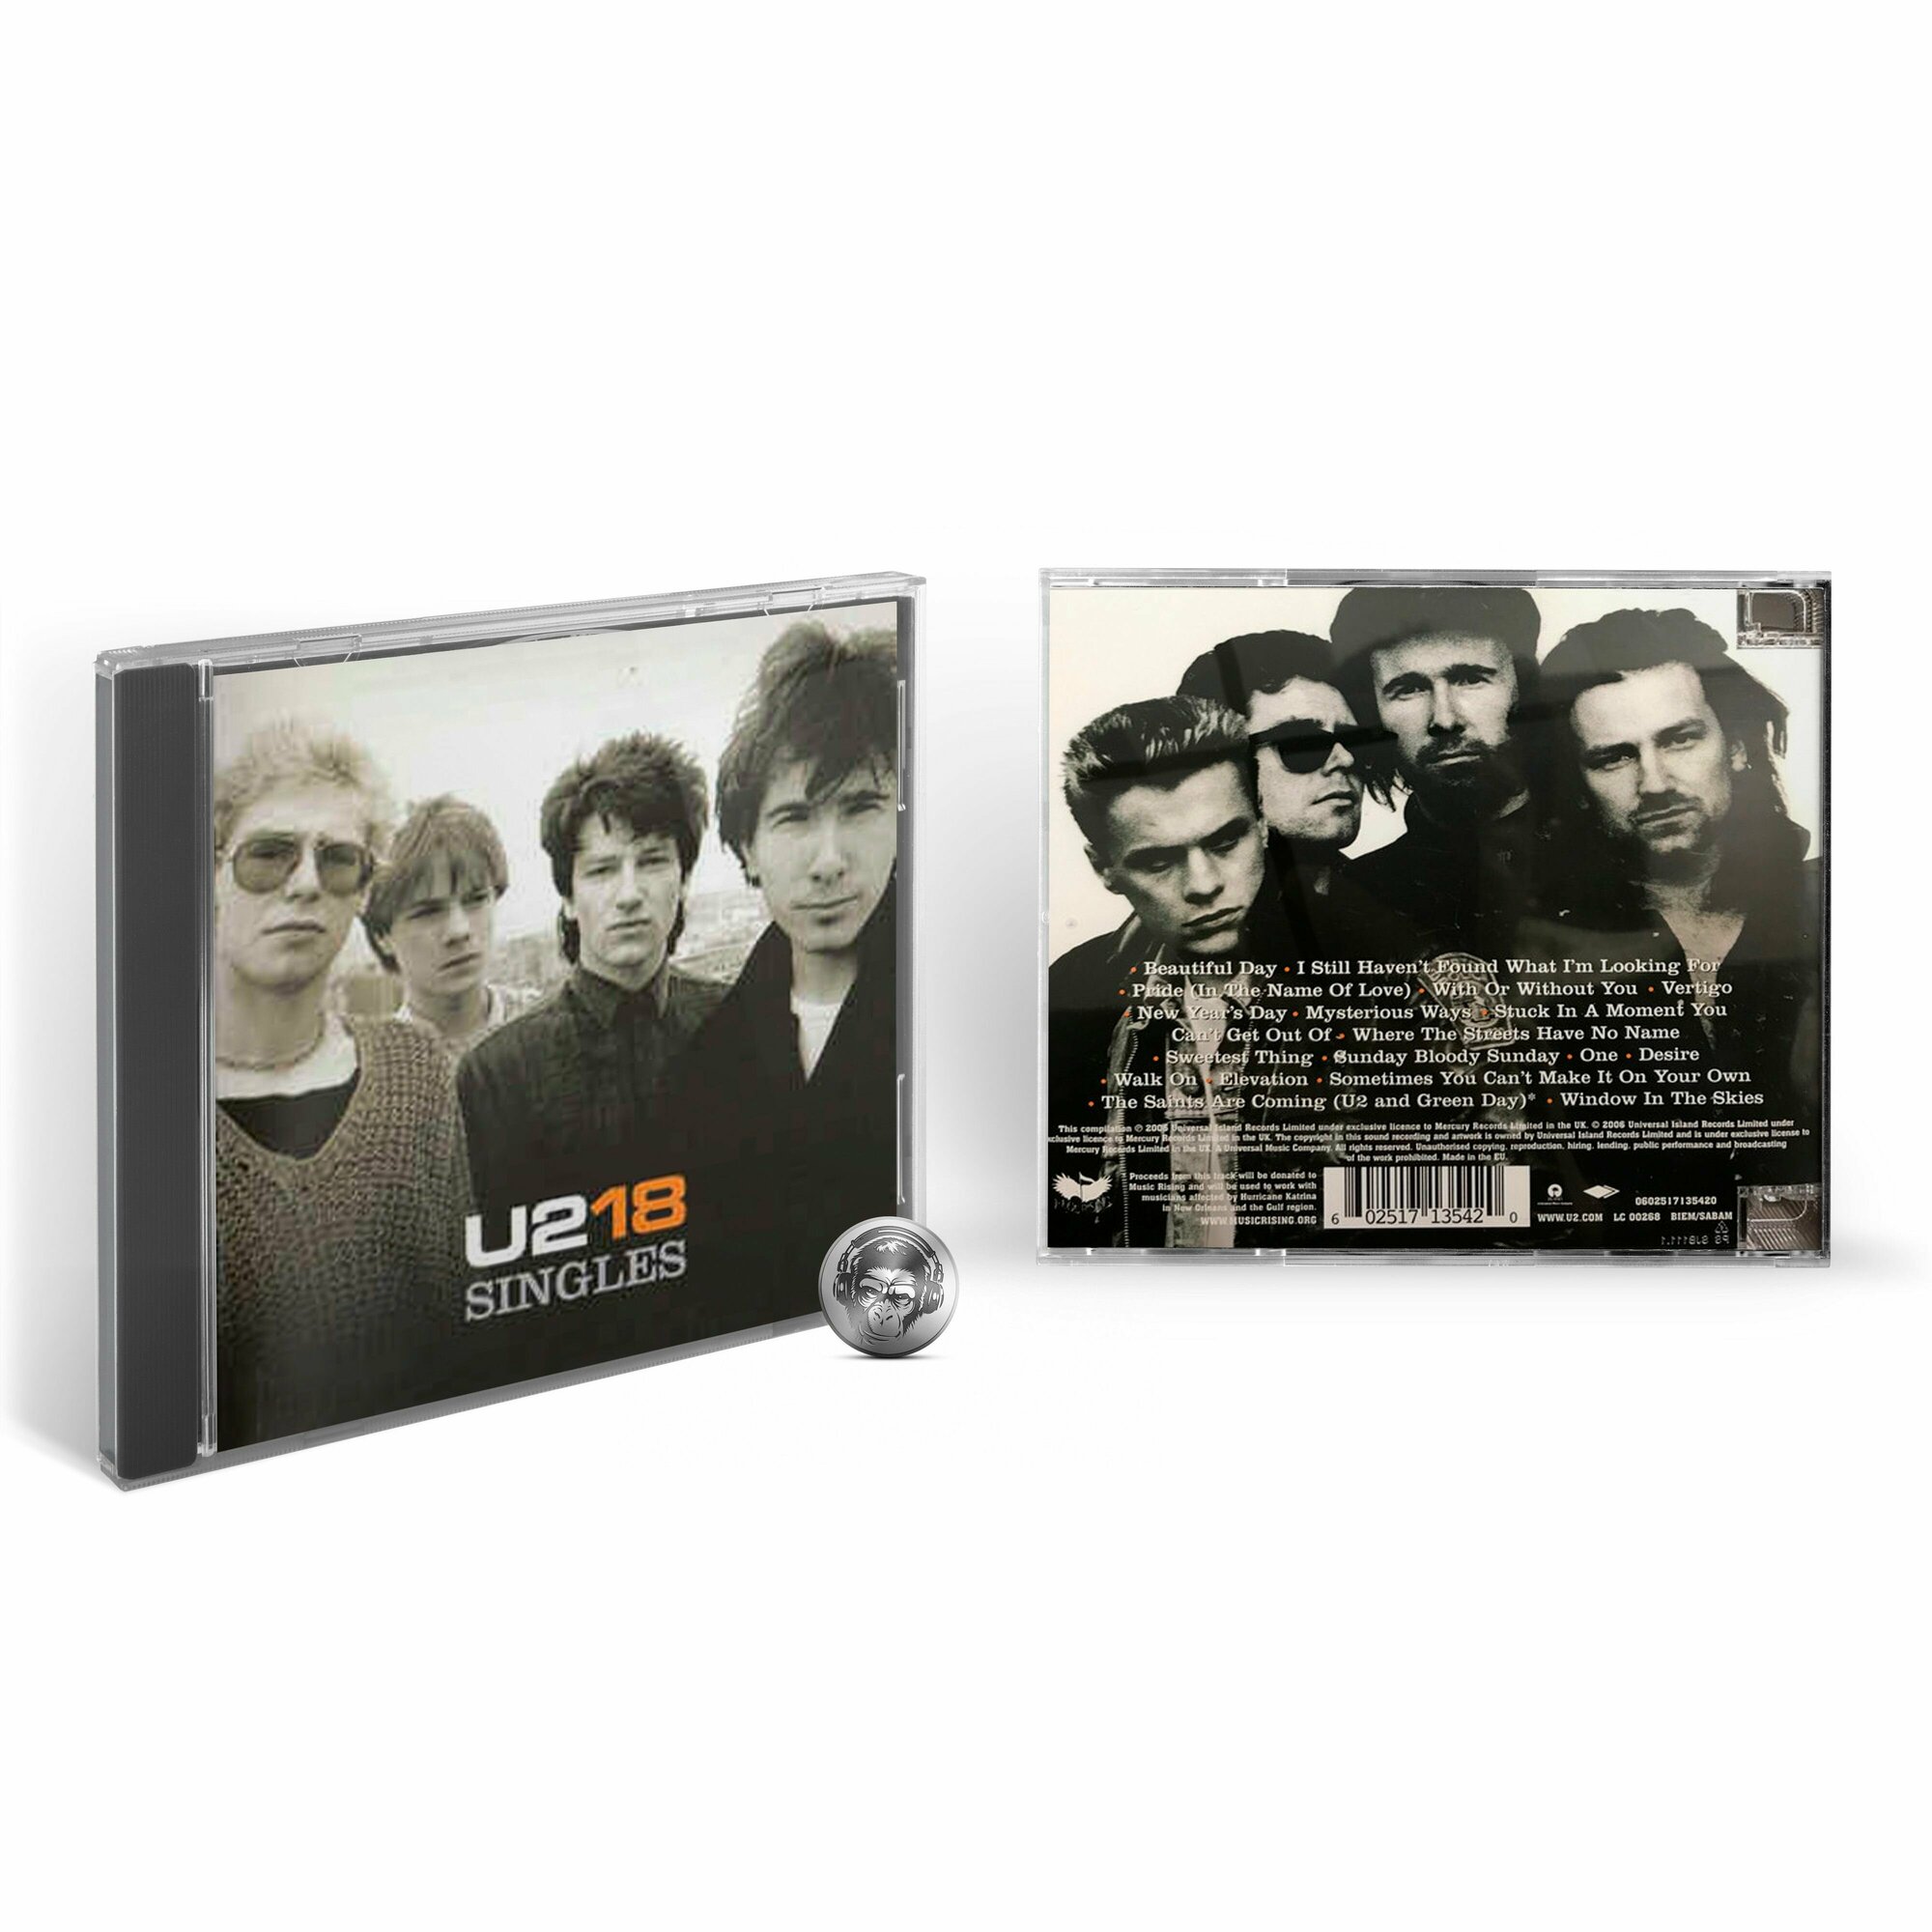 U2 - U218 Singles (1CD) 2006 Jewel Аудио диск